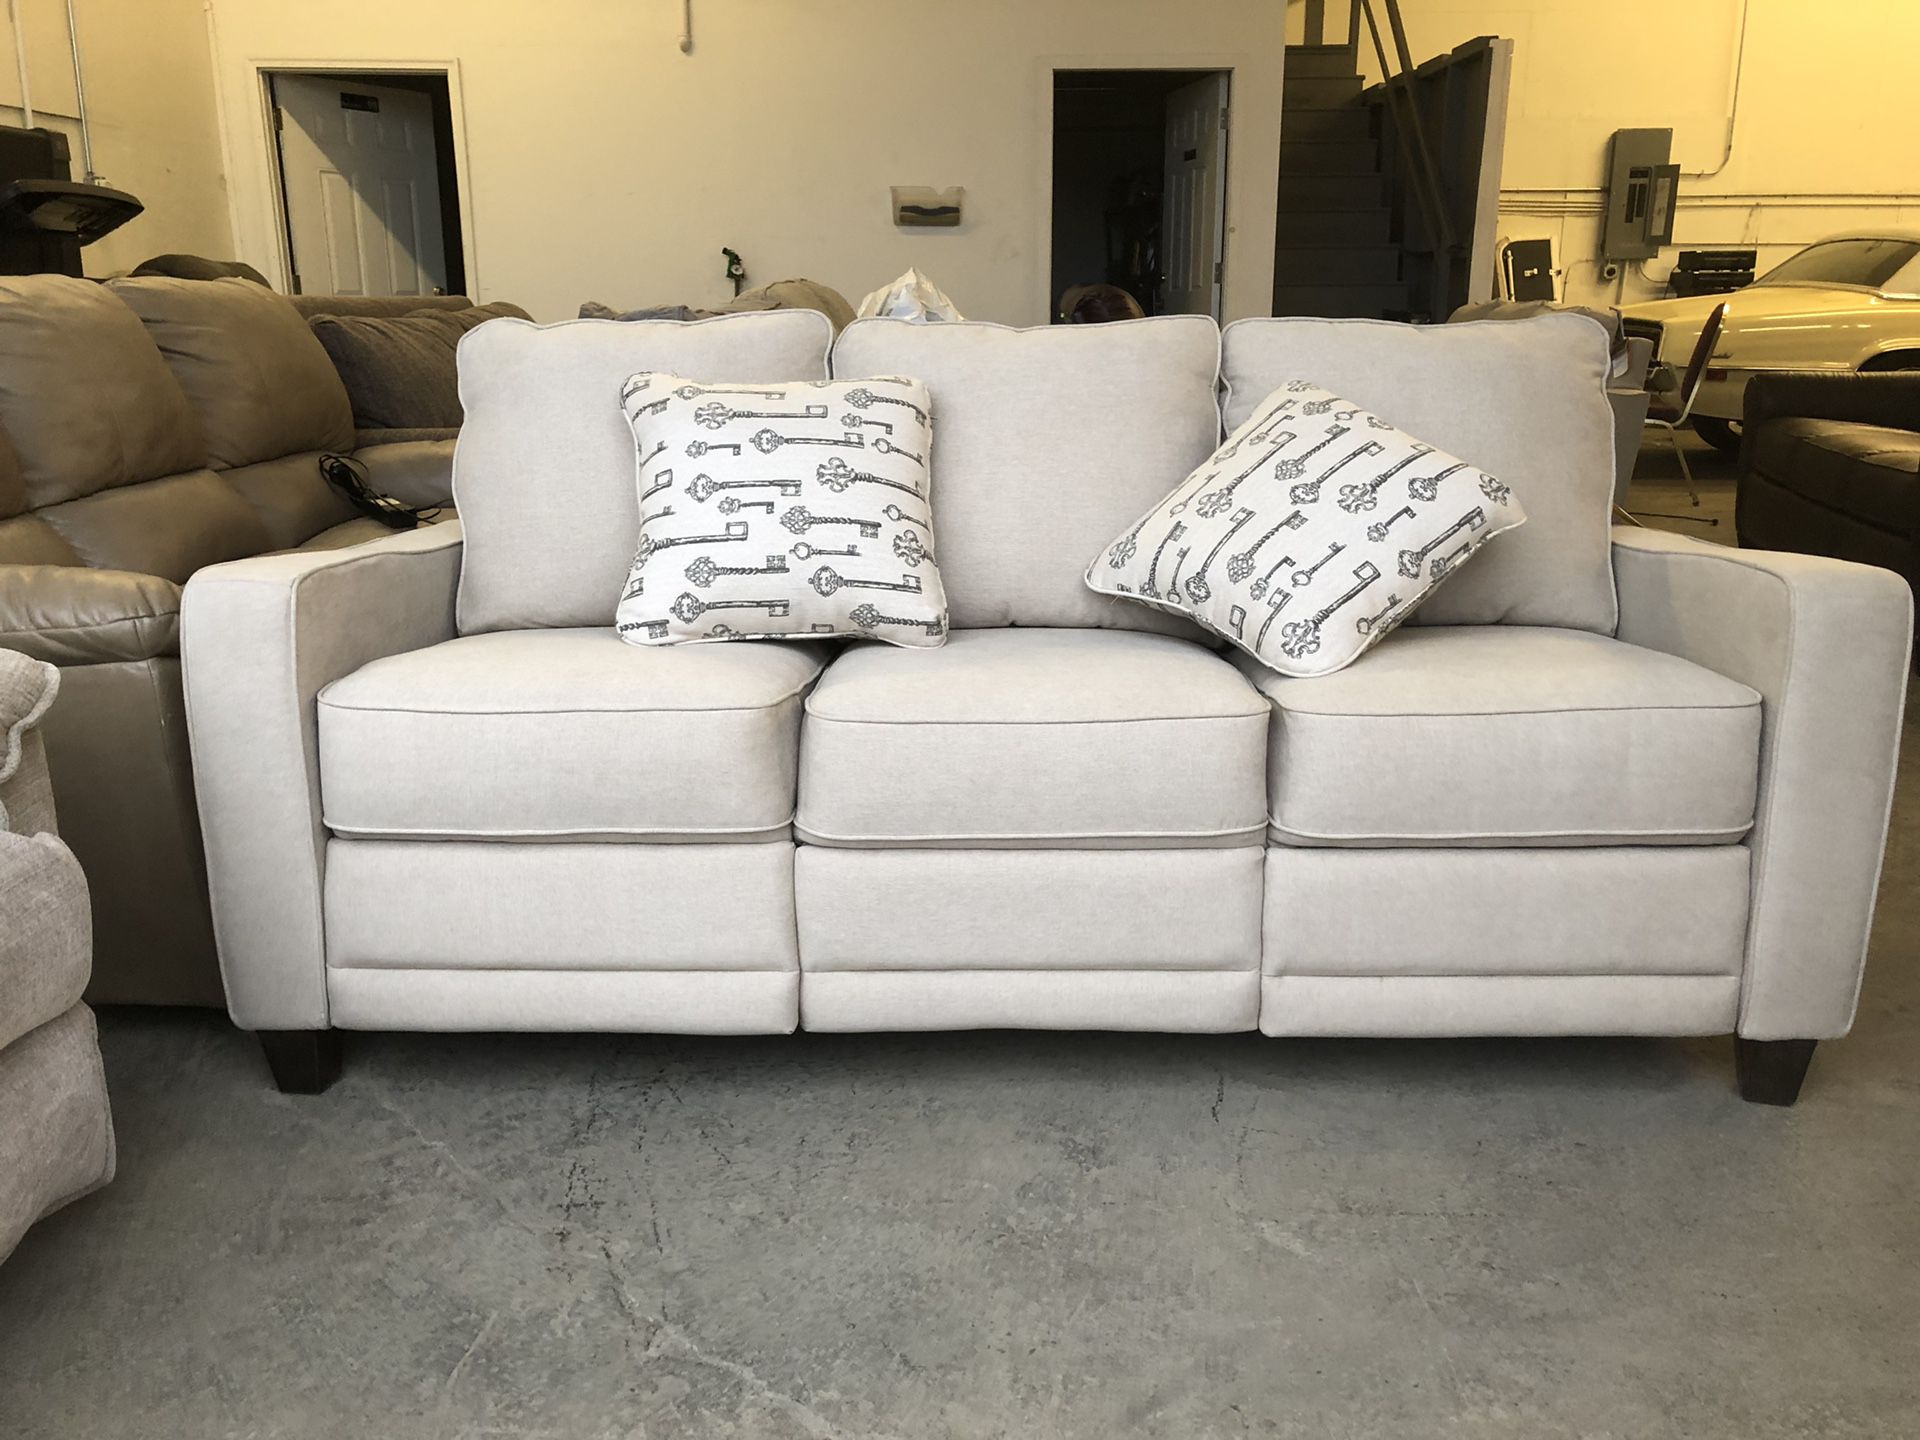 New La-Z-Boy Recliner Sofa Couch